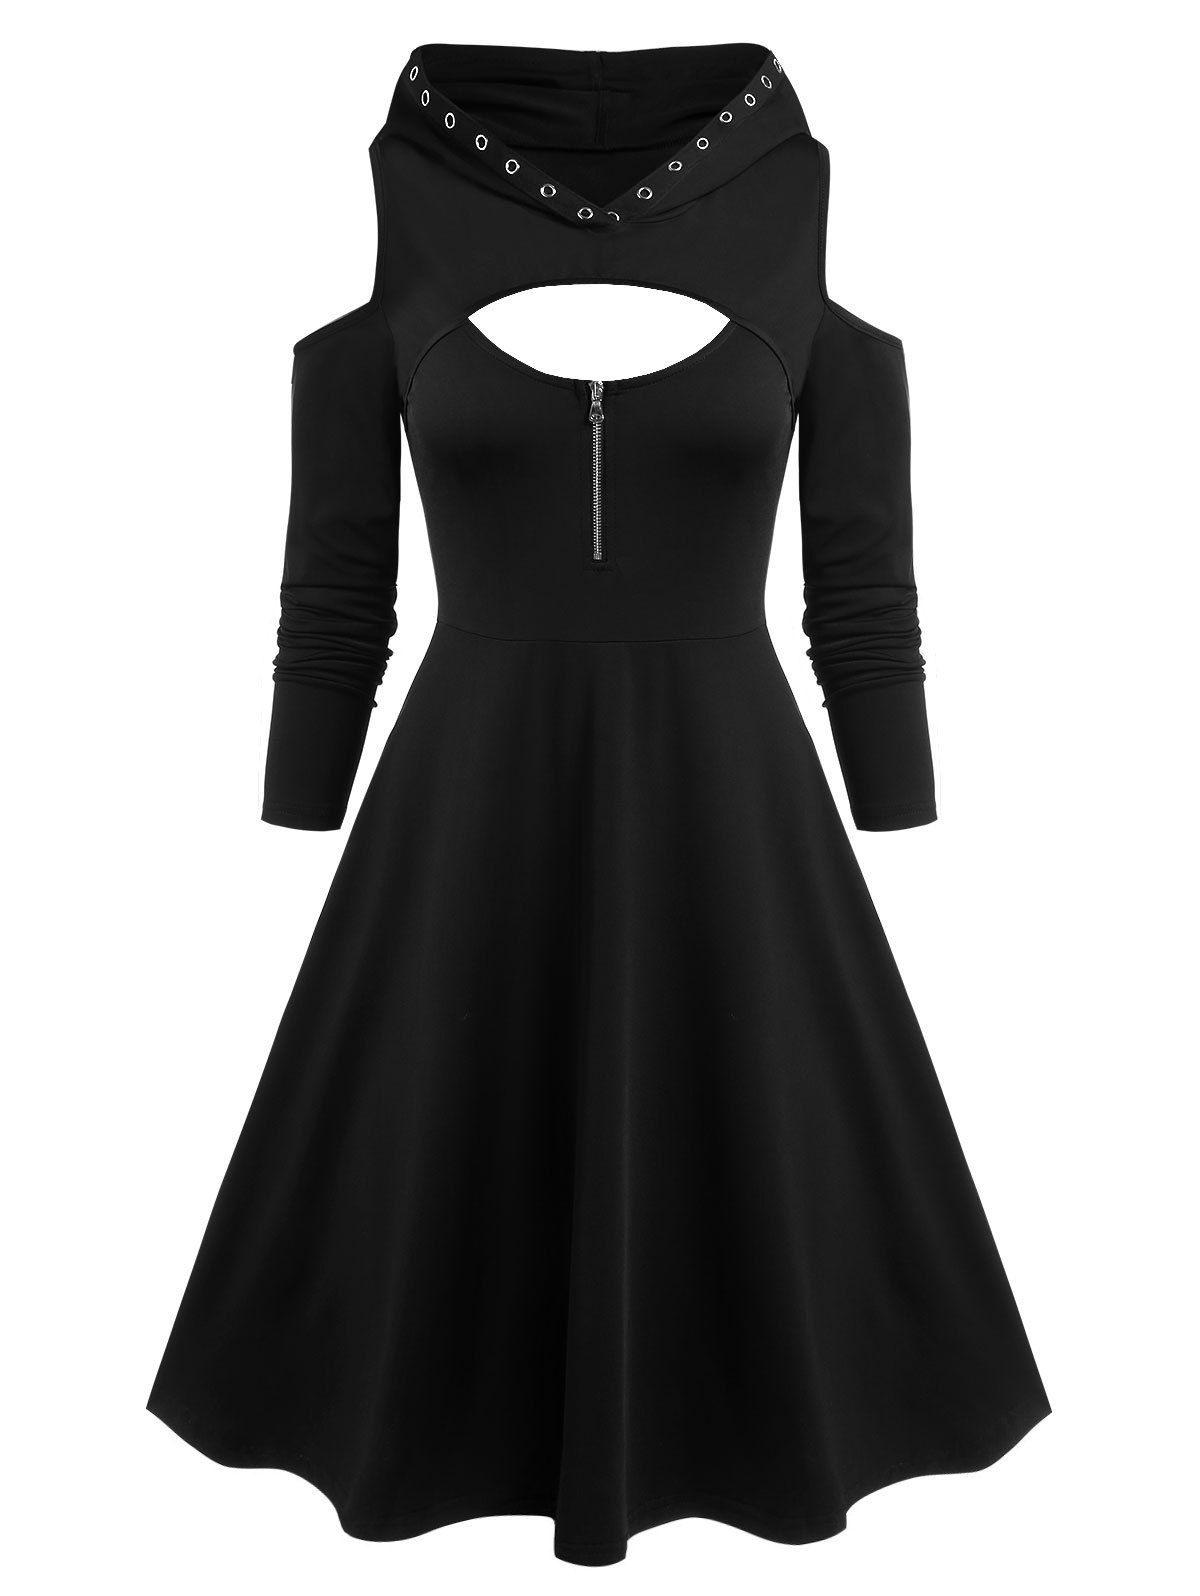 Cutout Hooded Eyelet Cold Shoulder Dress - BLACK XL